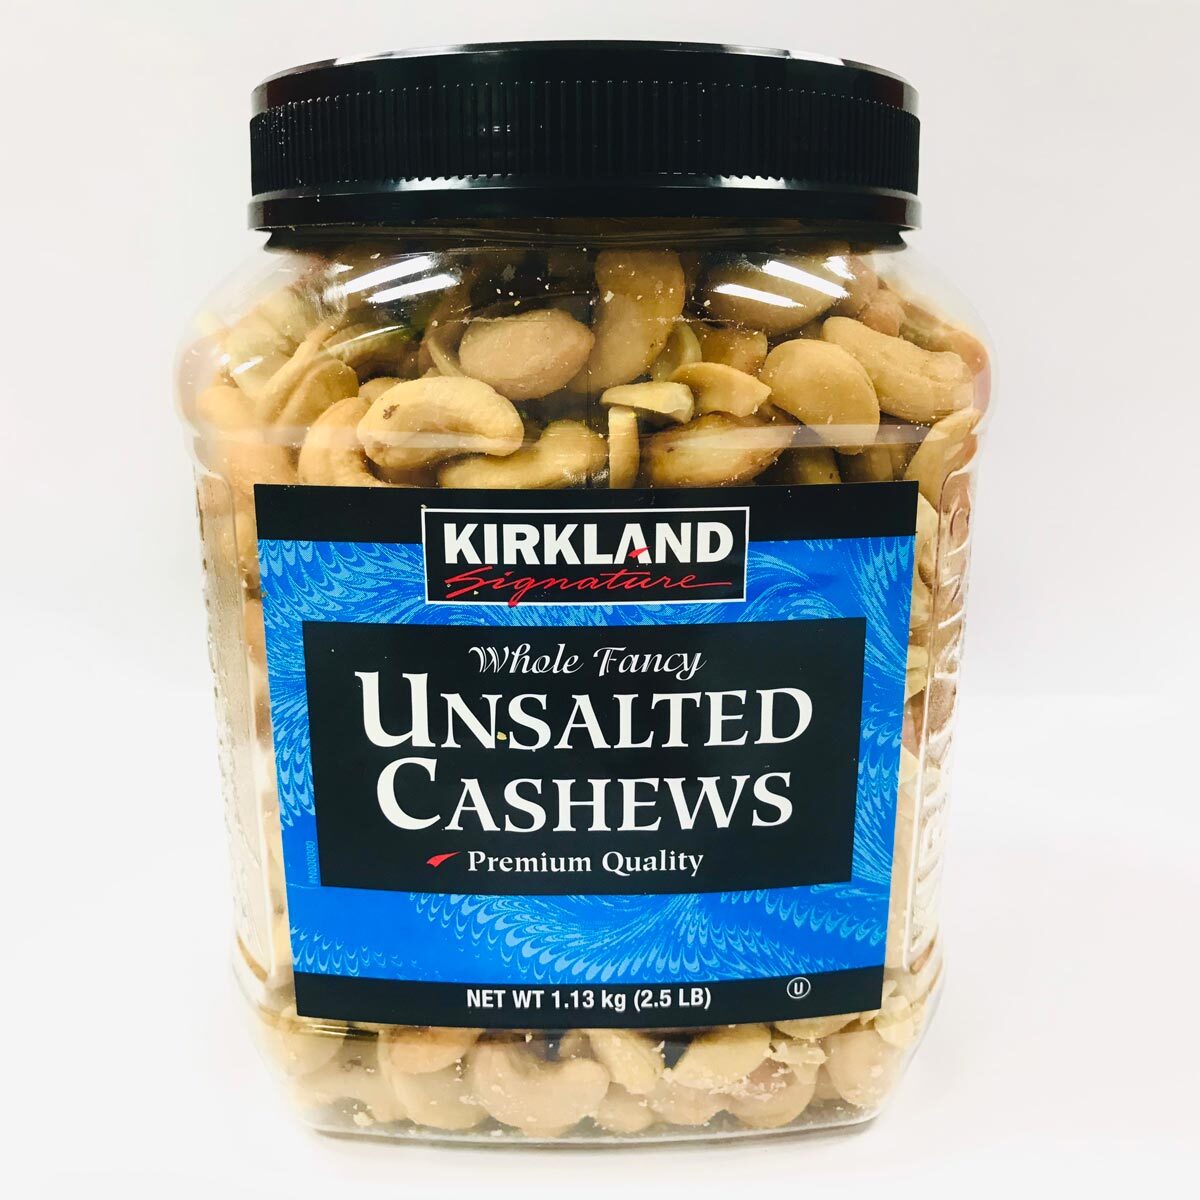 Kirkland Signature Whole Fancy Unsalted Cashews, 1.13kg Healthy Snacks Costco UK   